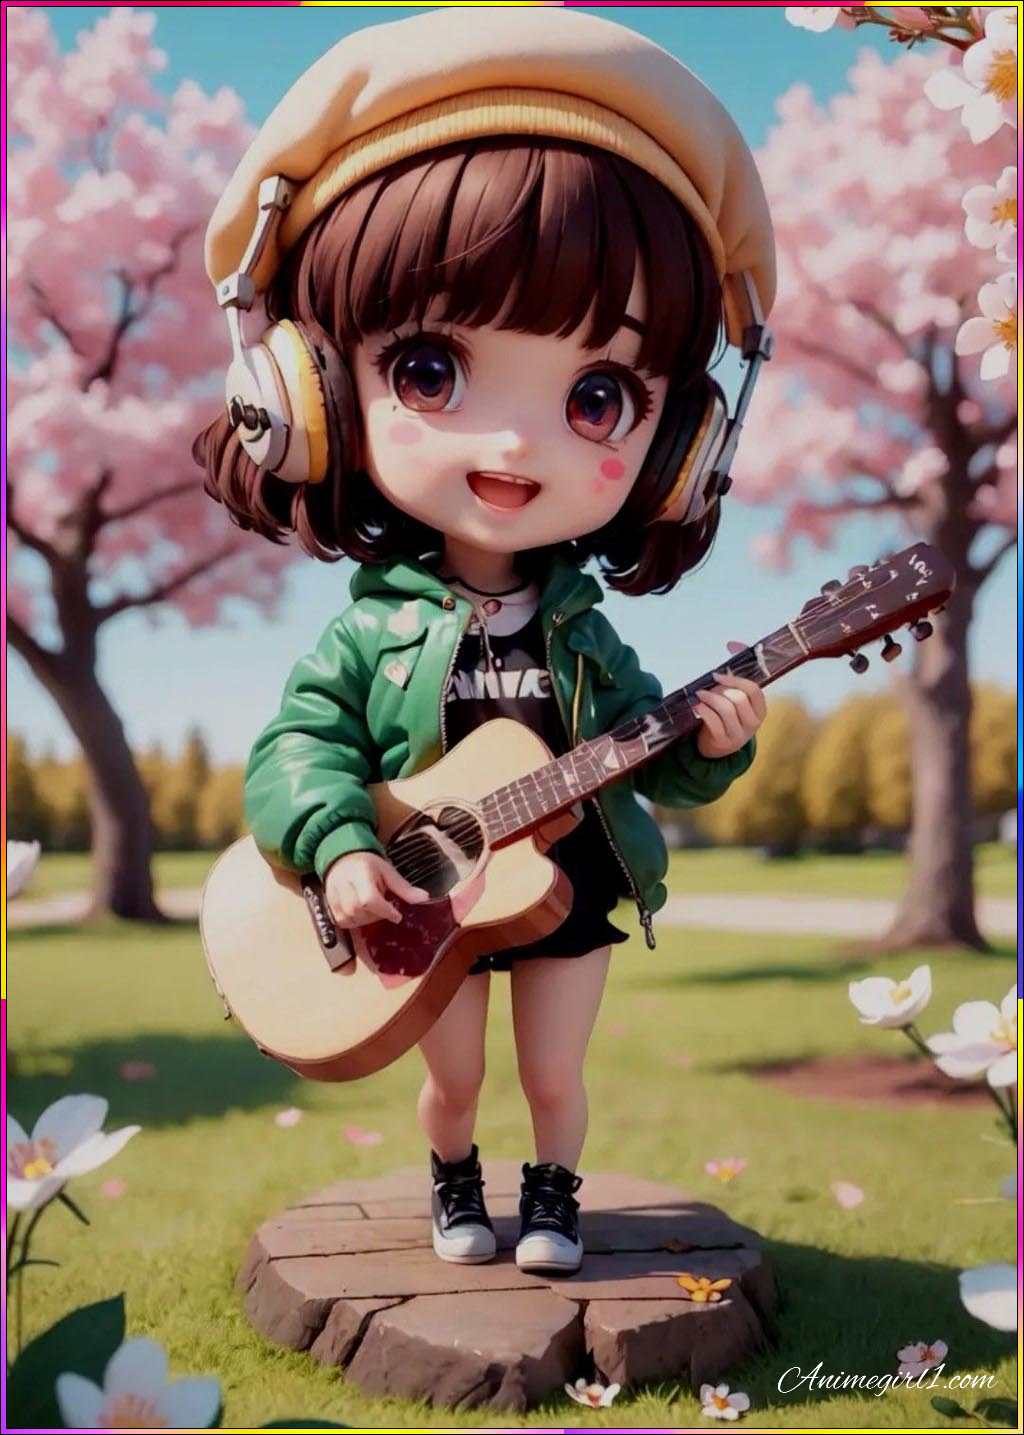 cute little anime girl playing guitar and enjoying